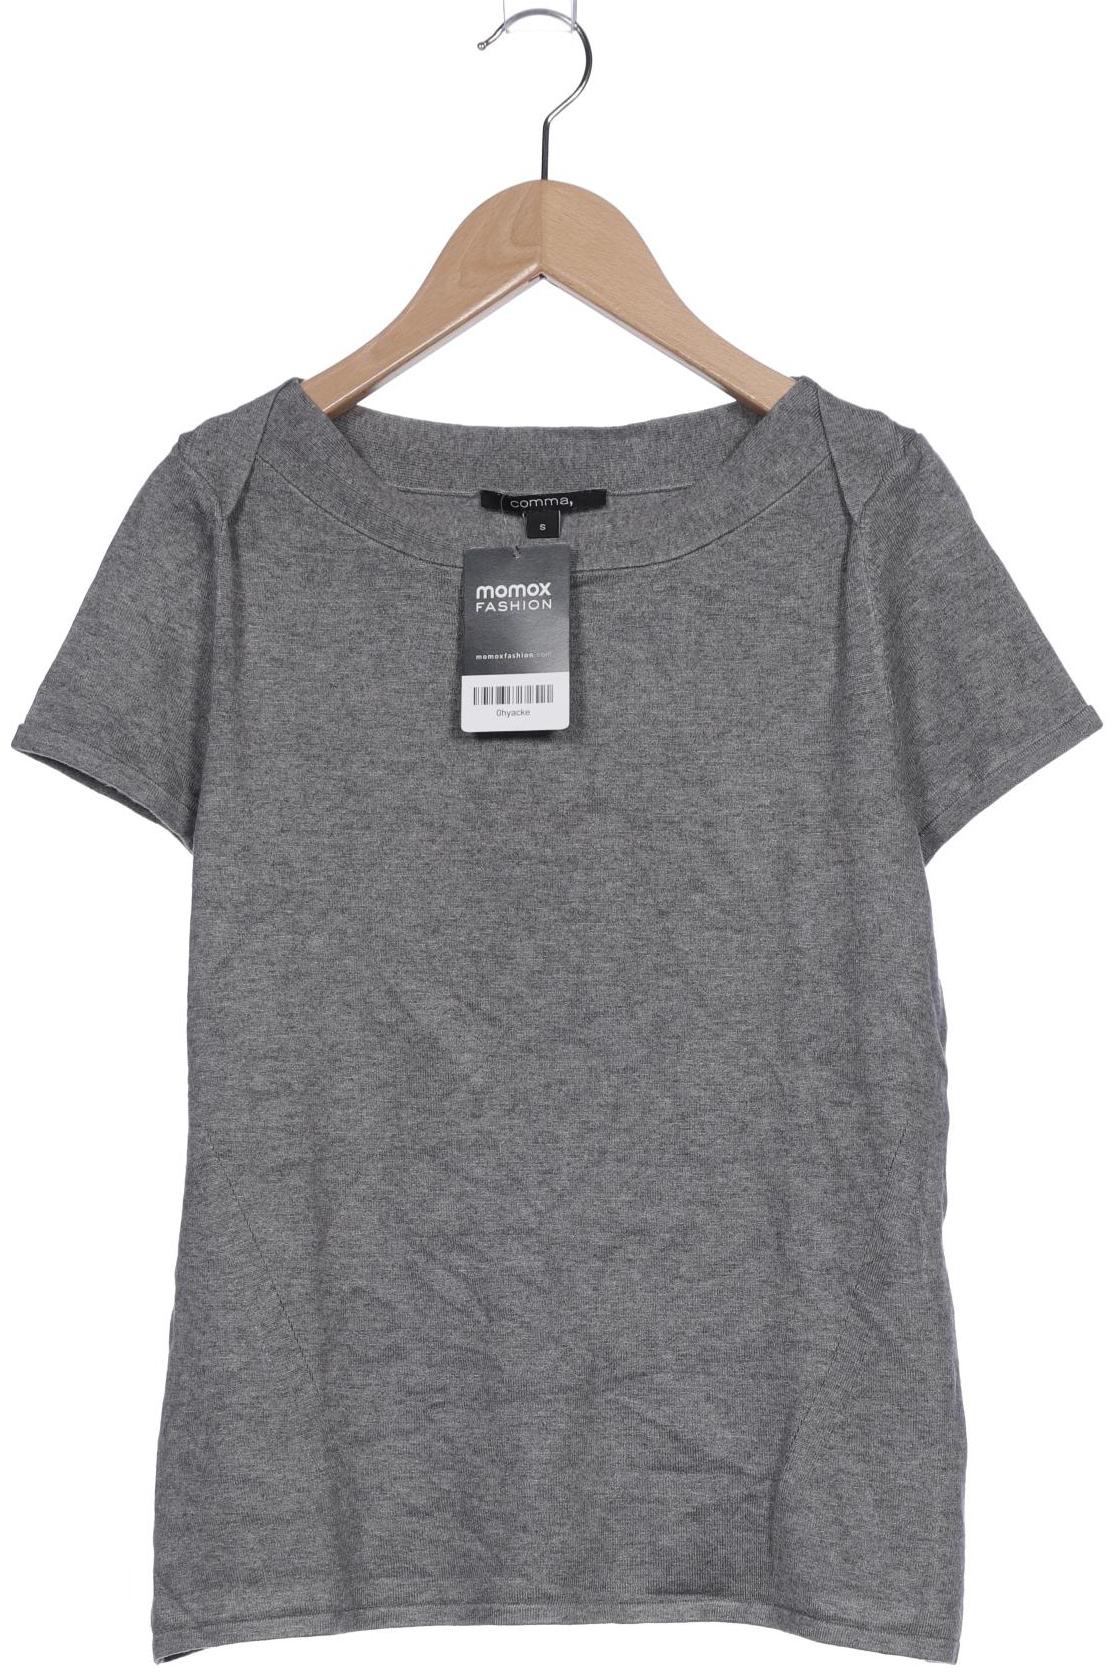 Comma Damen T-Shirt, grau von comma